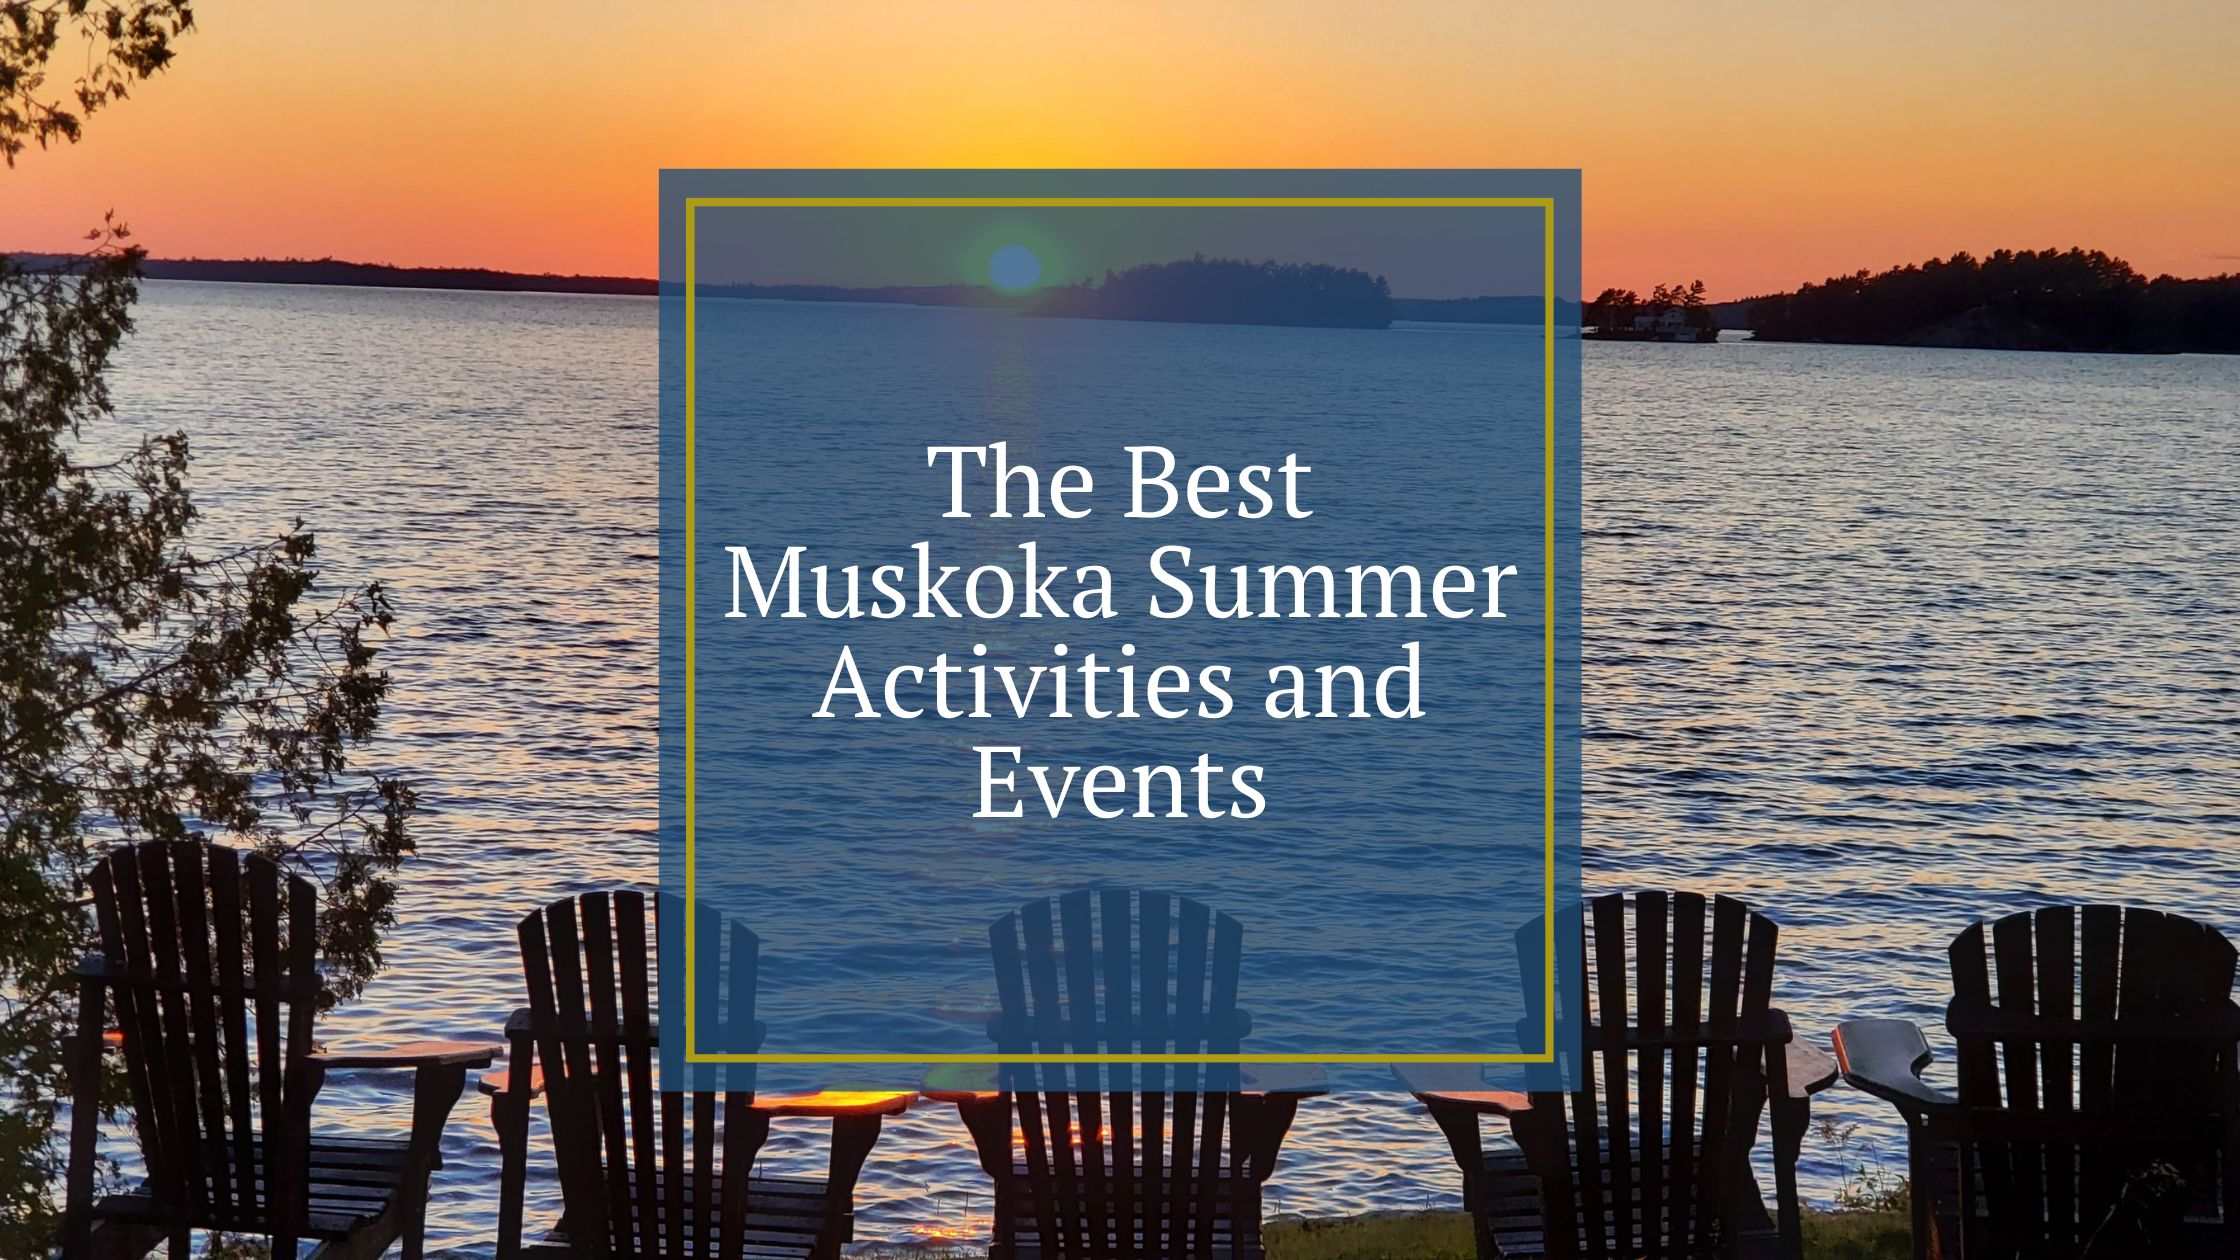 The Best Muskoka Summer Activities and Events